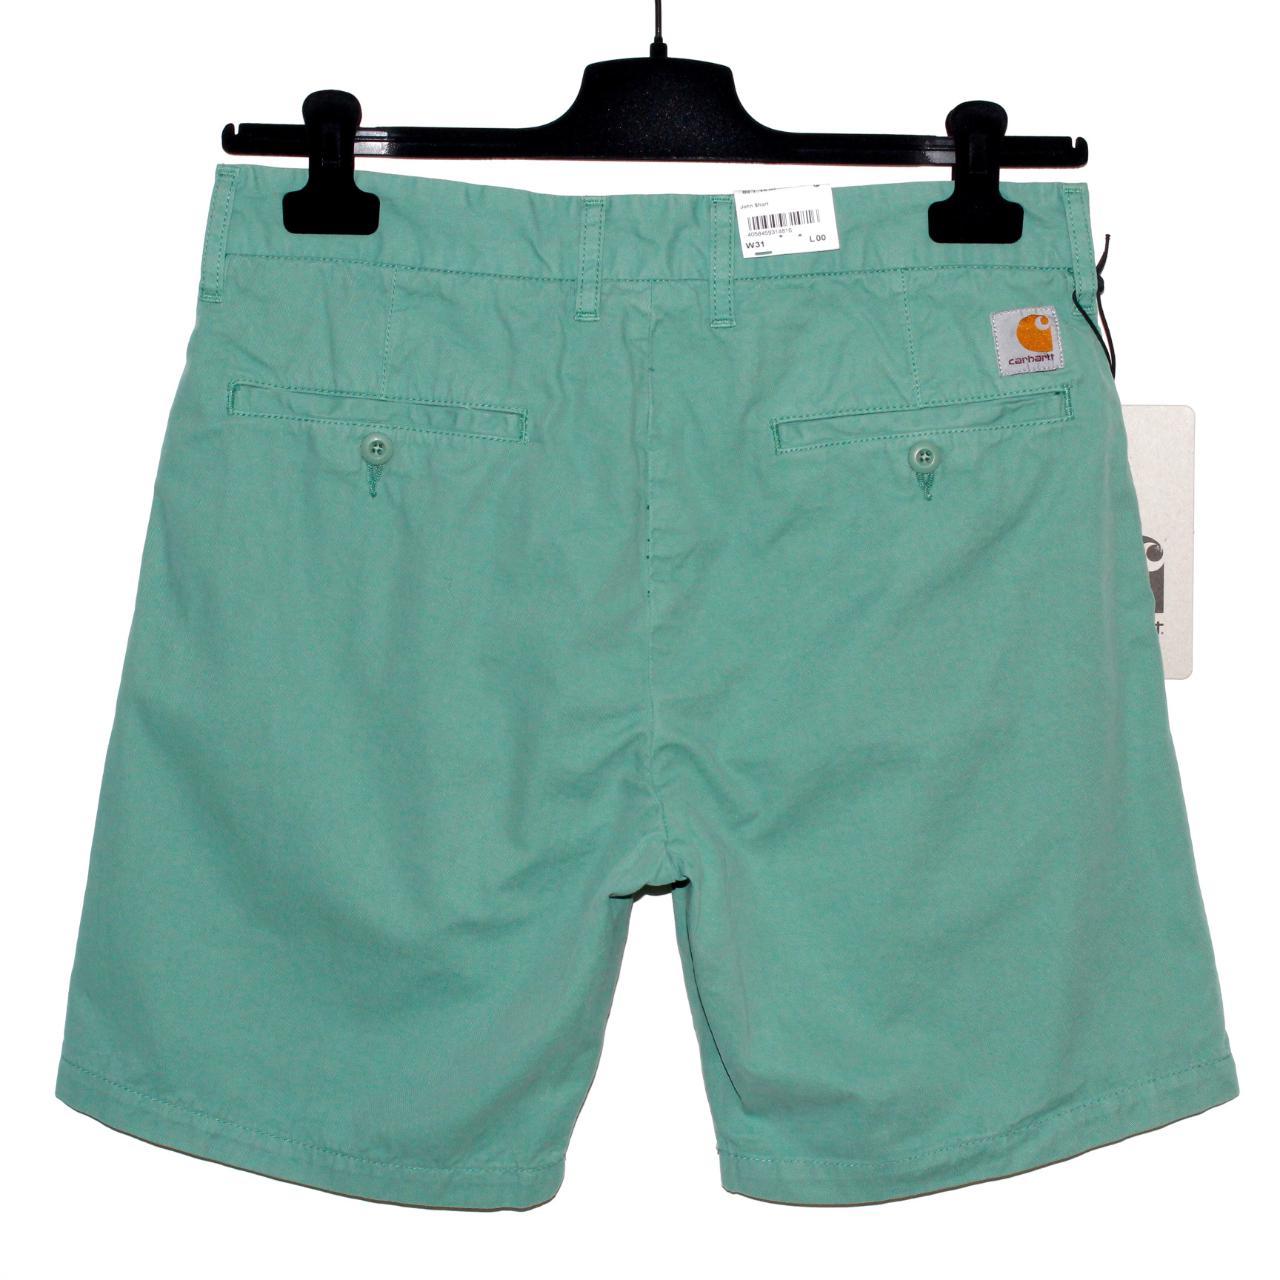 Product Image 2 - Carhartt WIP "John Short"

These shorts